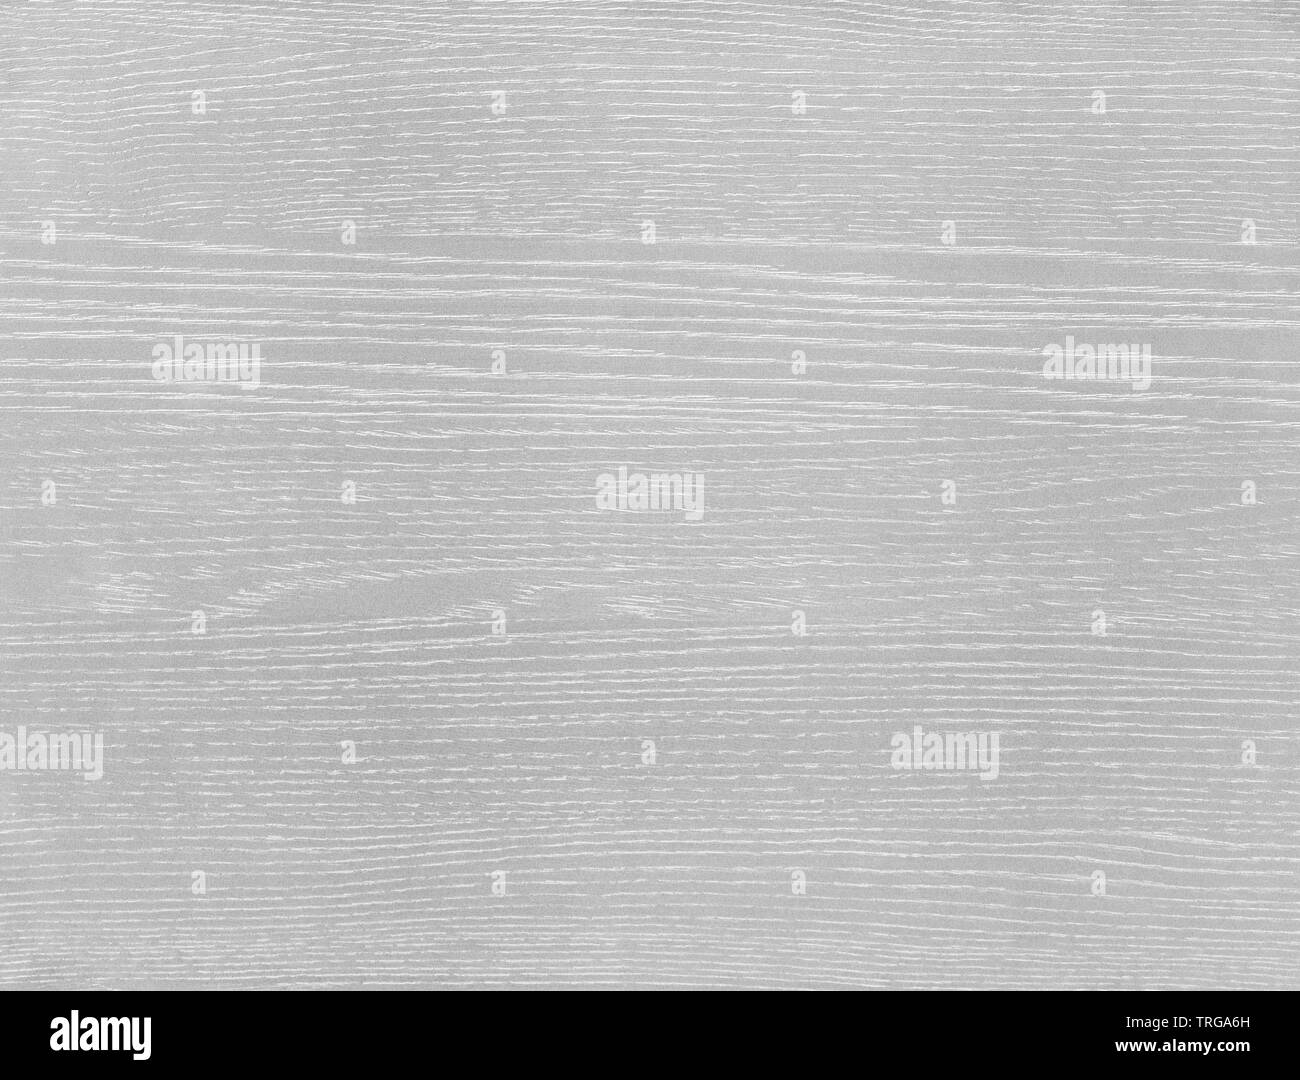 a full frame light grey wood grain surface Stock Photo